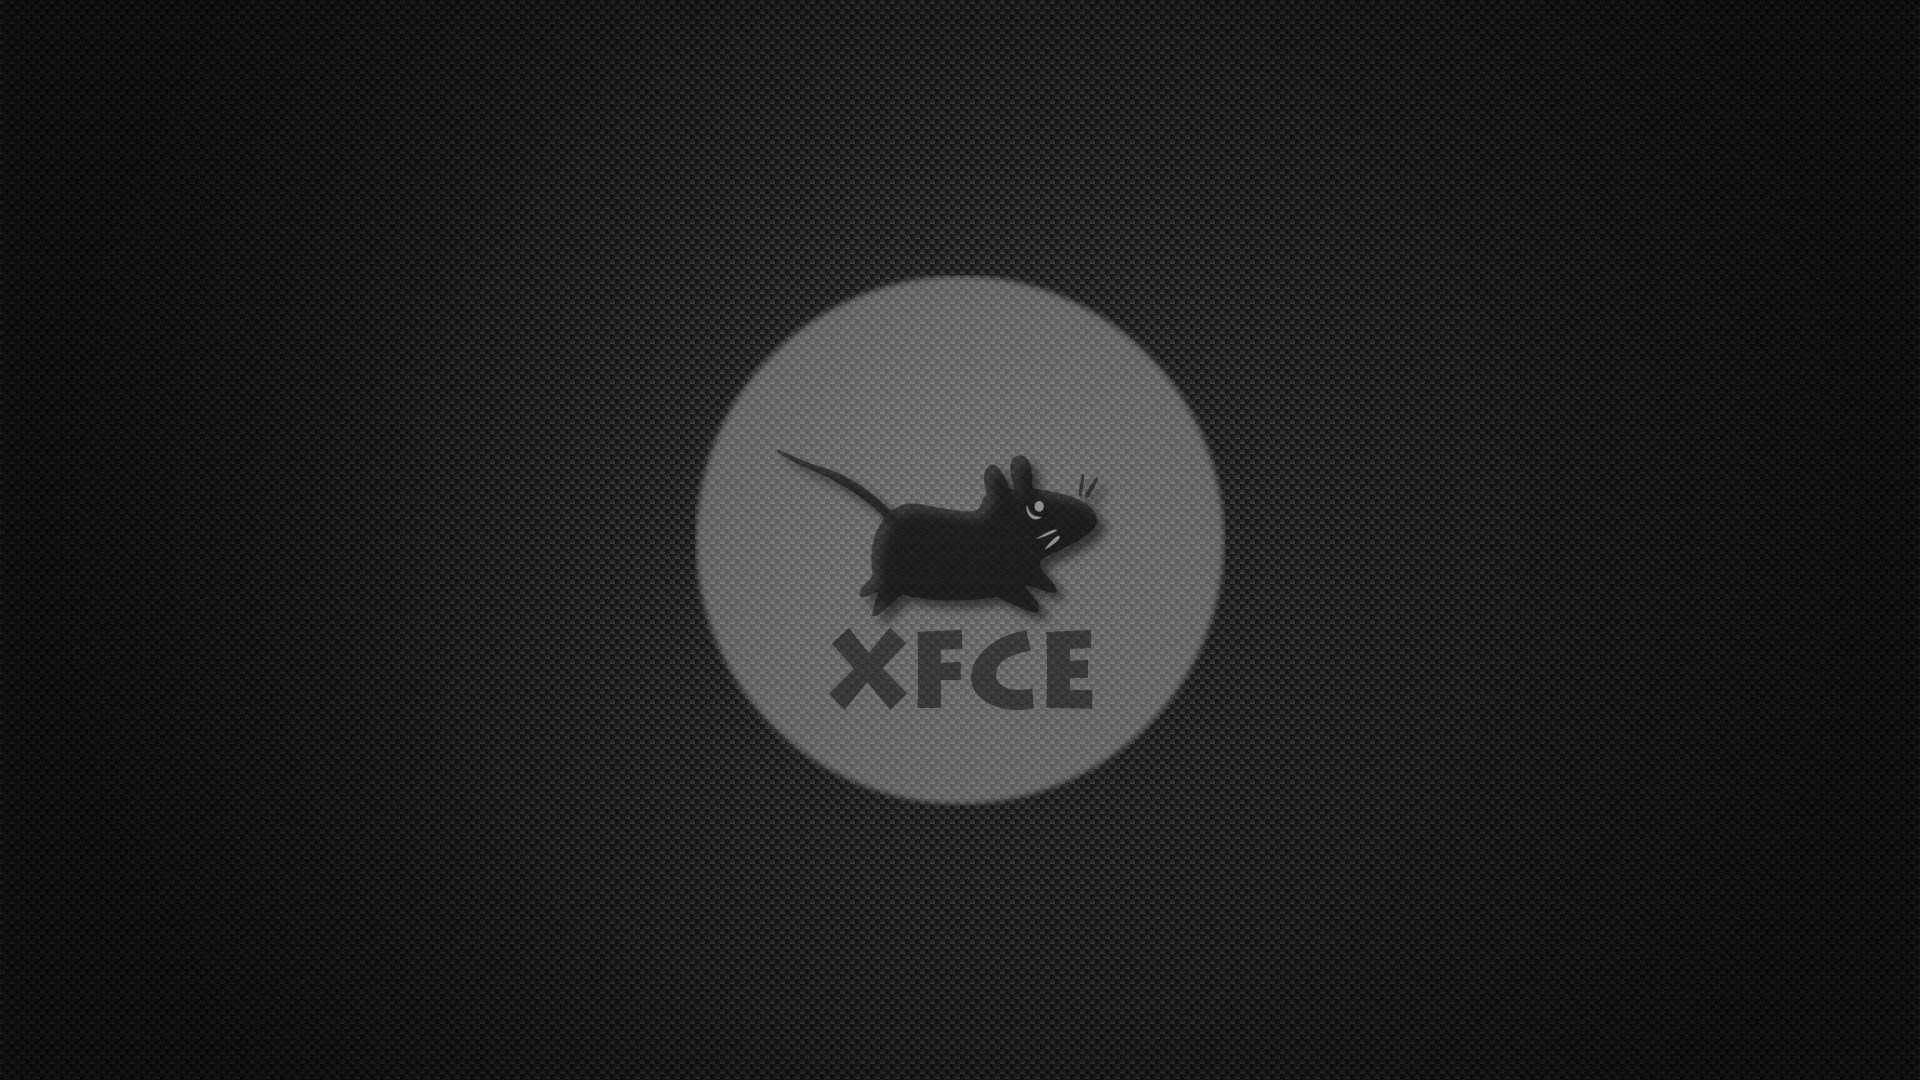 1920x1080 logos mice fibers xfce logo carbon fiber mouse desktop hd wallpaper